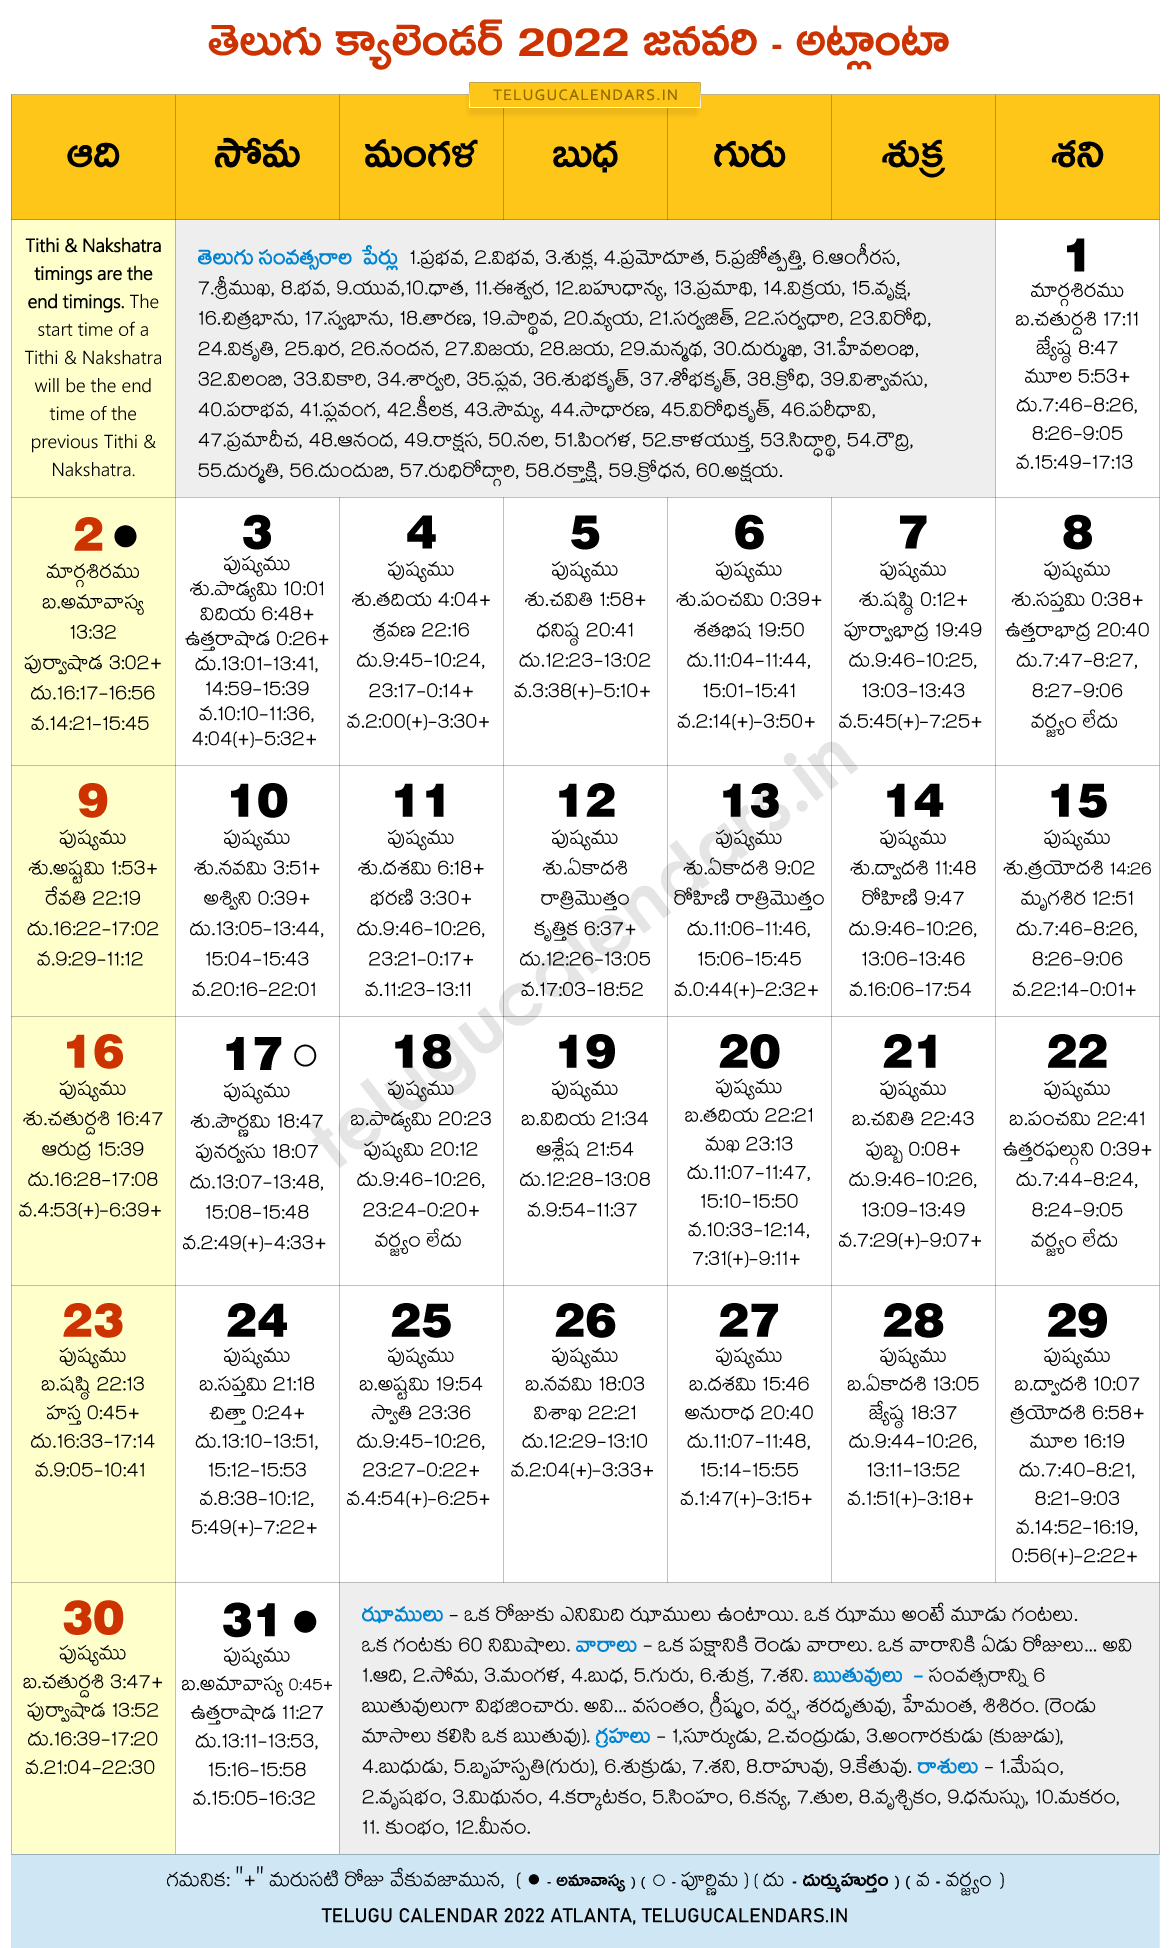 Usa 2022 Telugu Calendar January Archives - 2022 Telugu Calendar Pdf